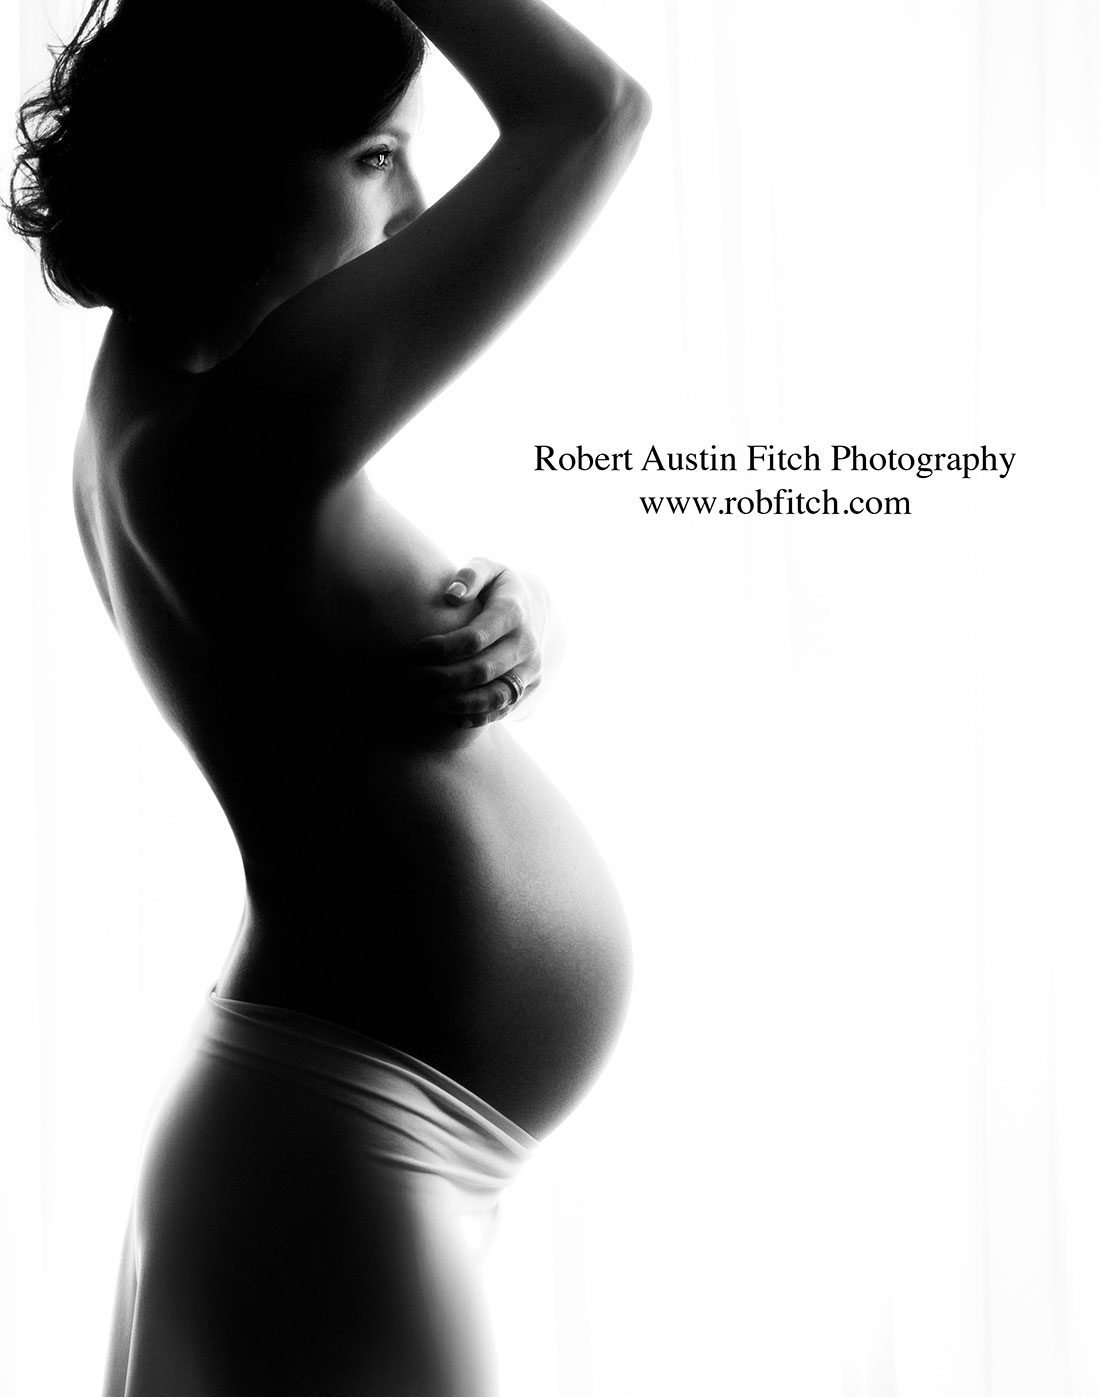 Artistic Maternity Photography Artistic Pregnancy Photos